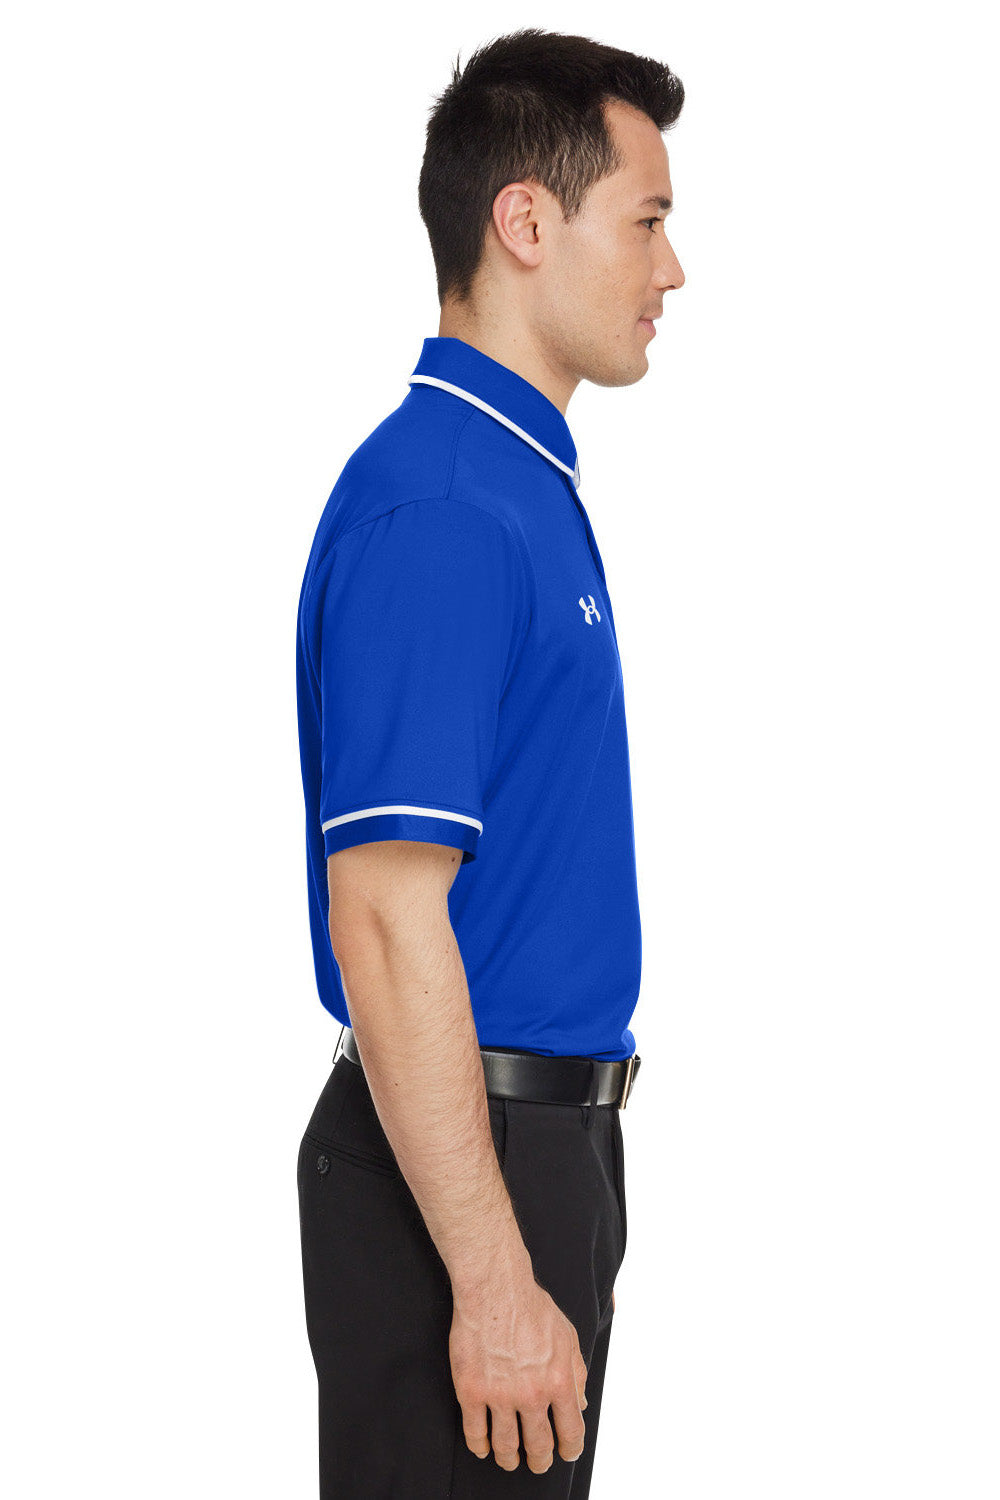 Under Armour 1376904 Mens Teams Performance Moisture Wicking Short Sleeve Polo Shirt Royal Blue Model Side